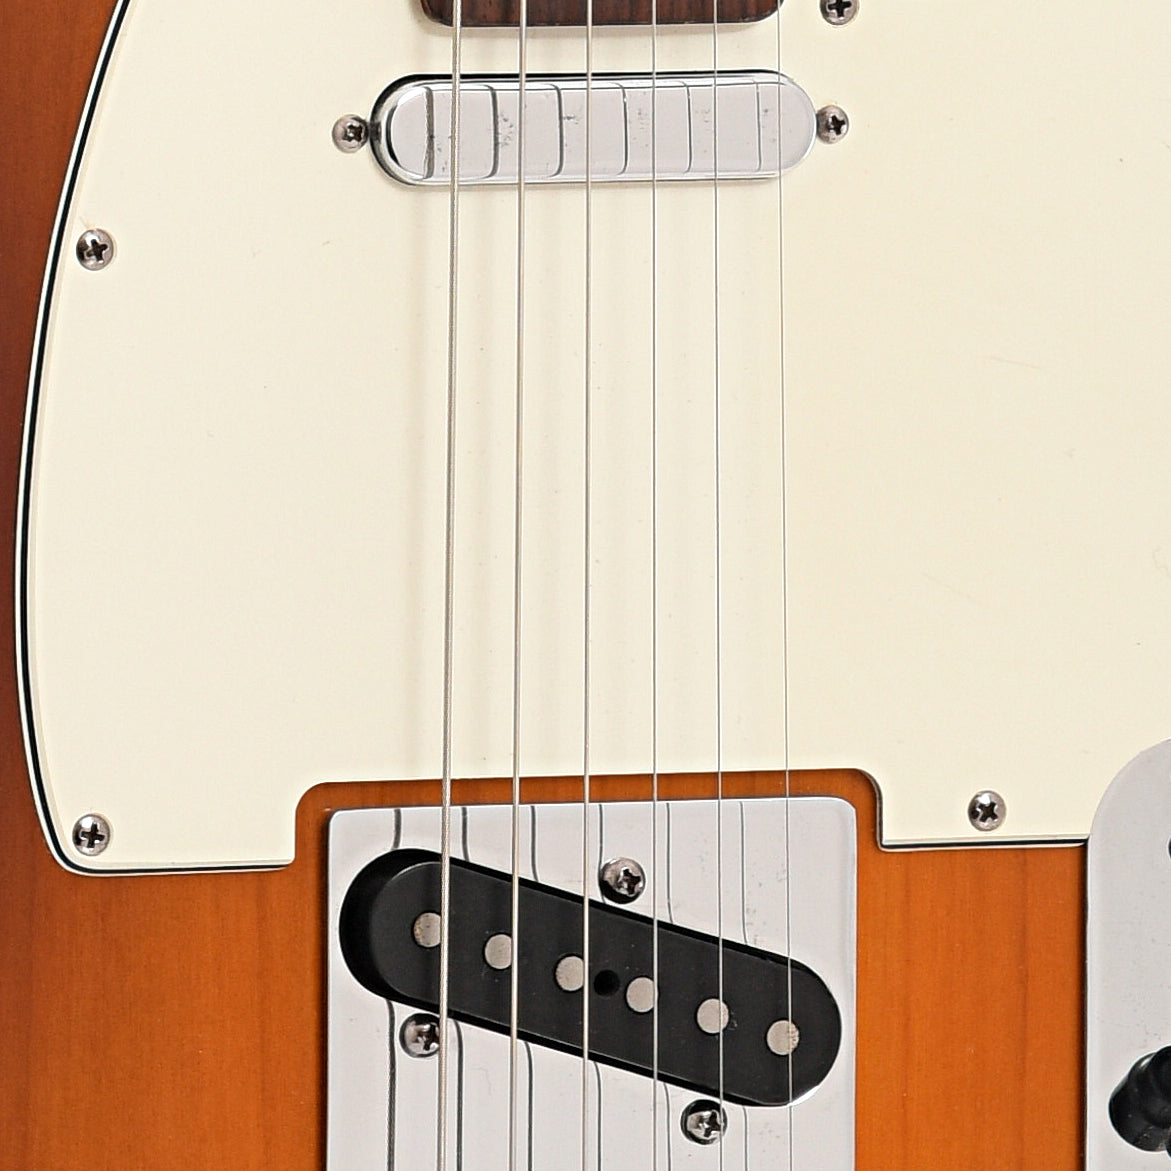 Pickups of Fender American Standard Telecaster Electric Guitar (1996)